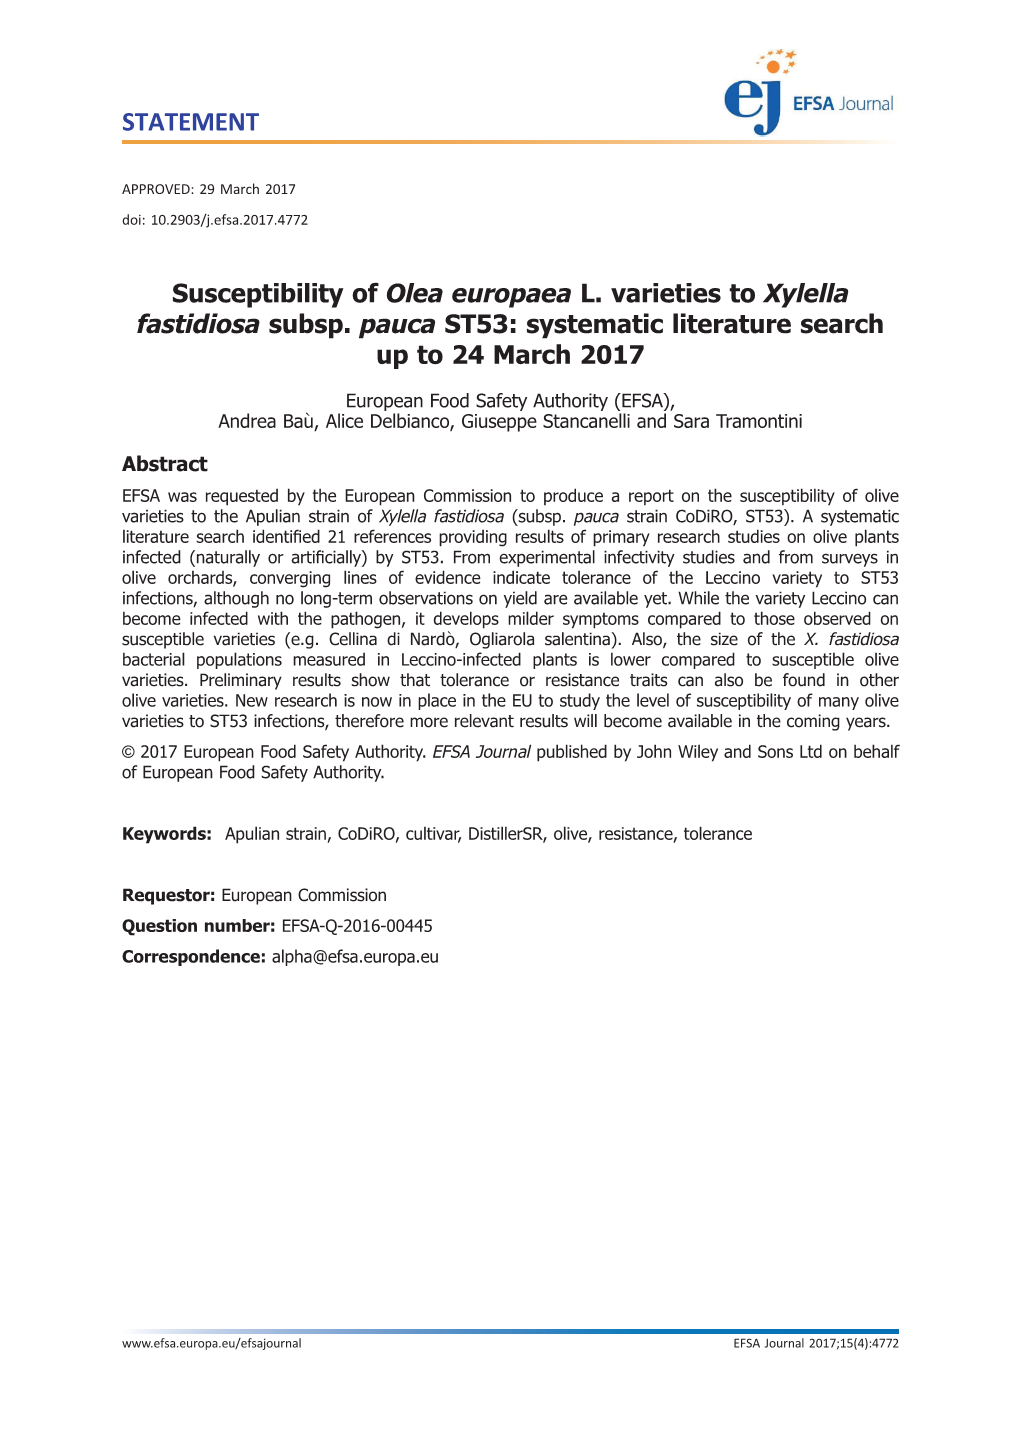 Susceptibility of Olea Europaea L. Varieties to Xylella Fastidiosa Subsp